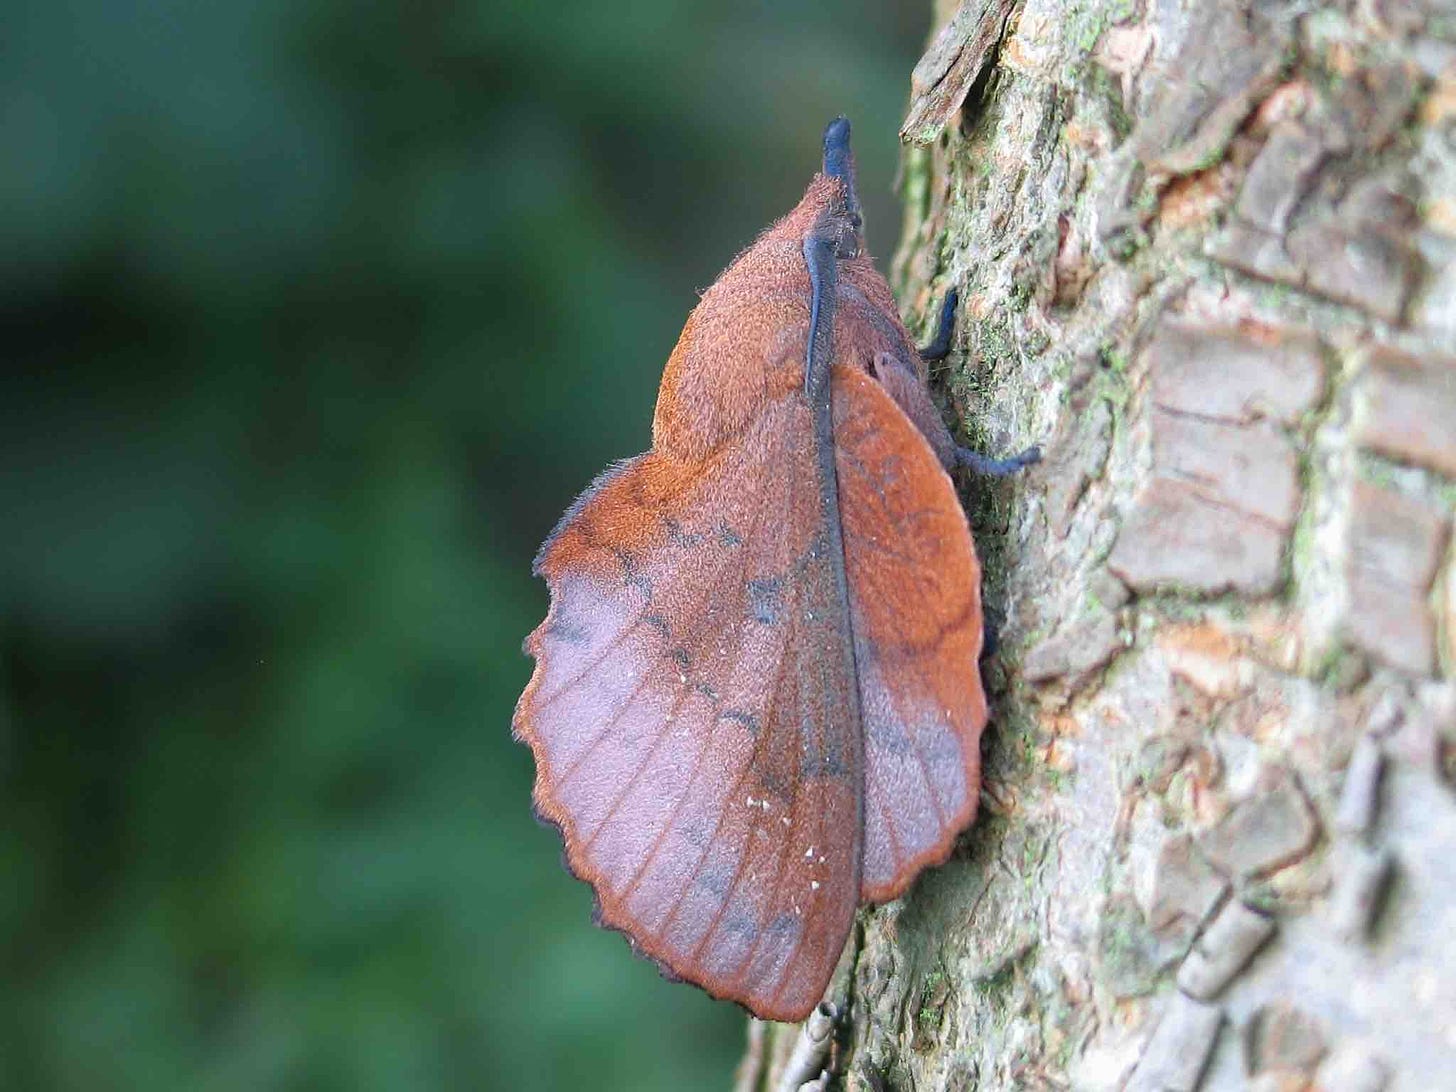 The Lappet moth